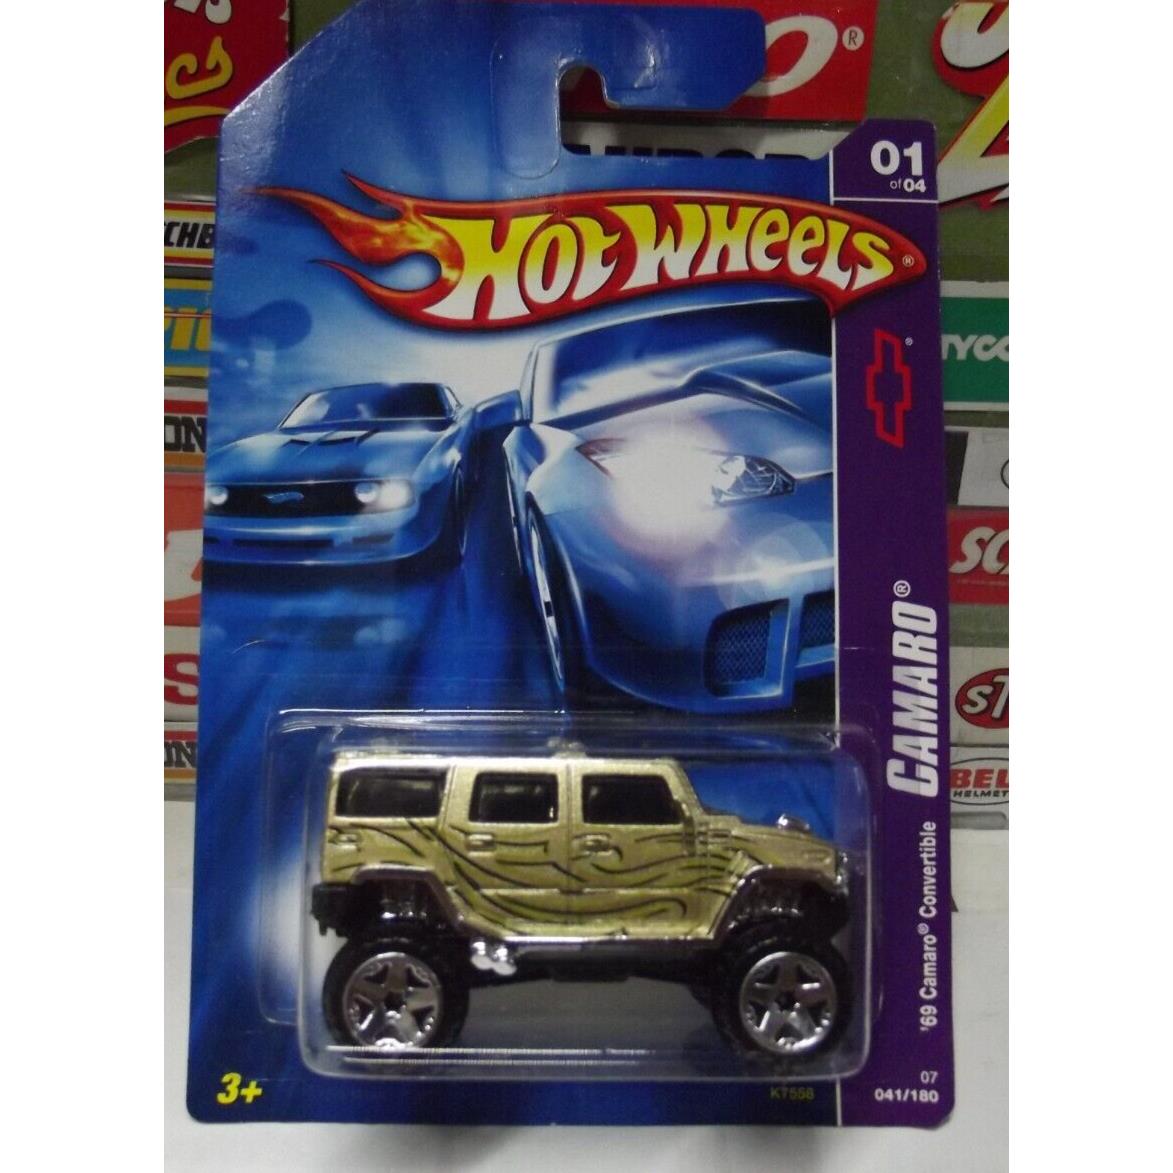 Hot Wheels 1:64 Hummer / Camaro Factory Error Card 1/4 41/180 K7558 Bin 11